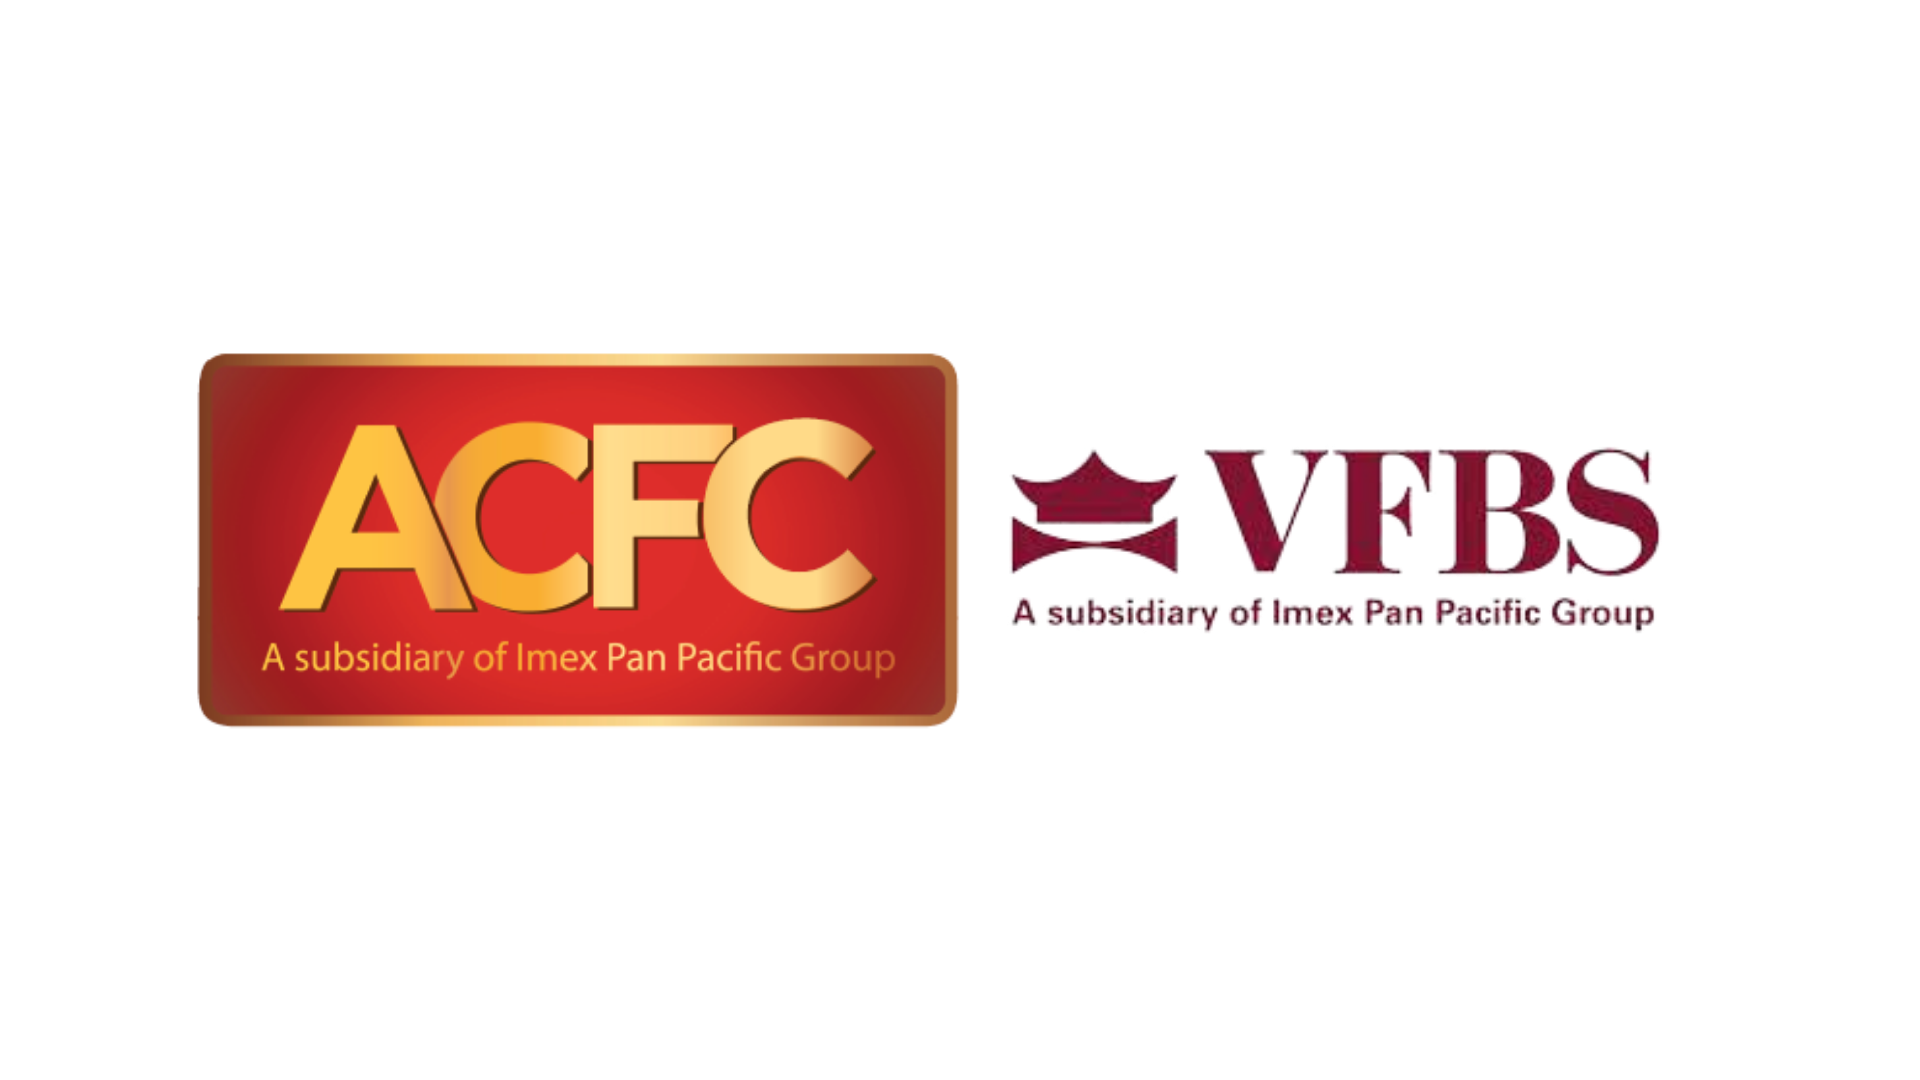 ACFC&VFBS